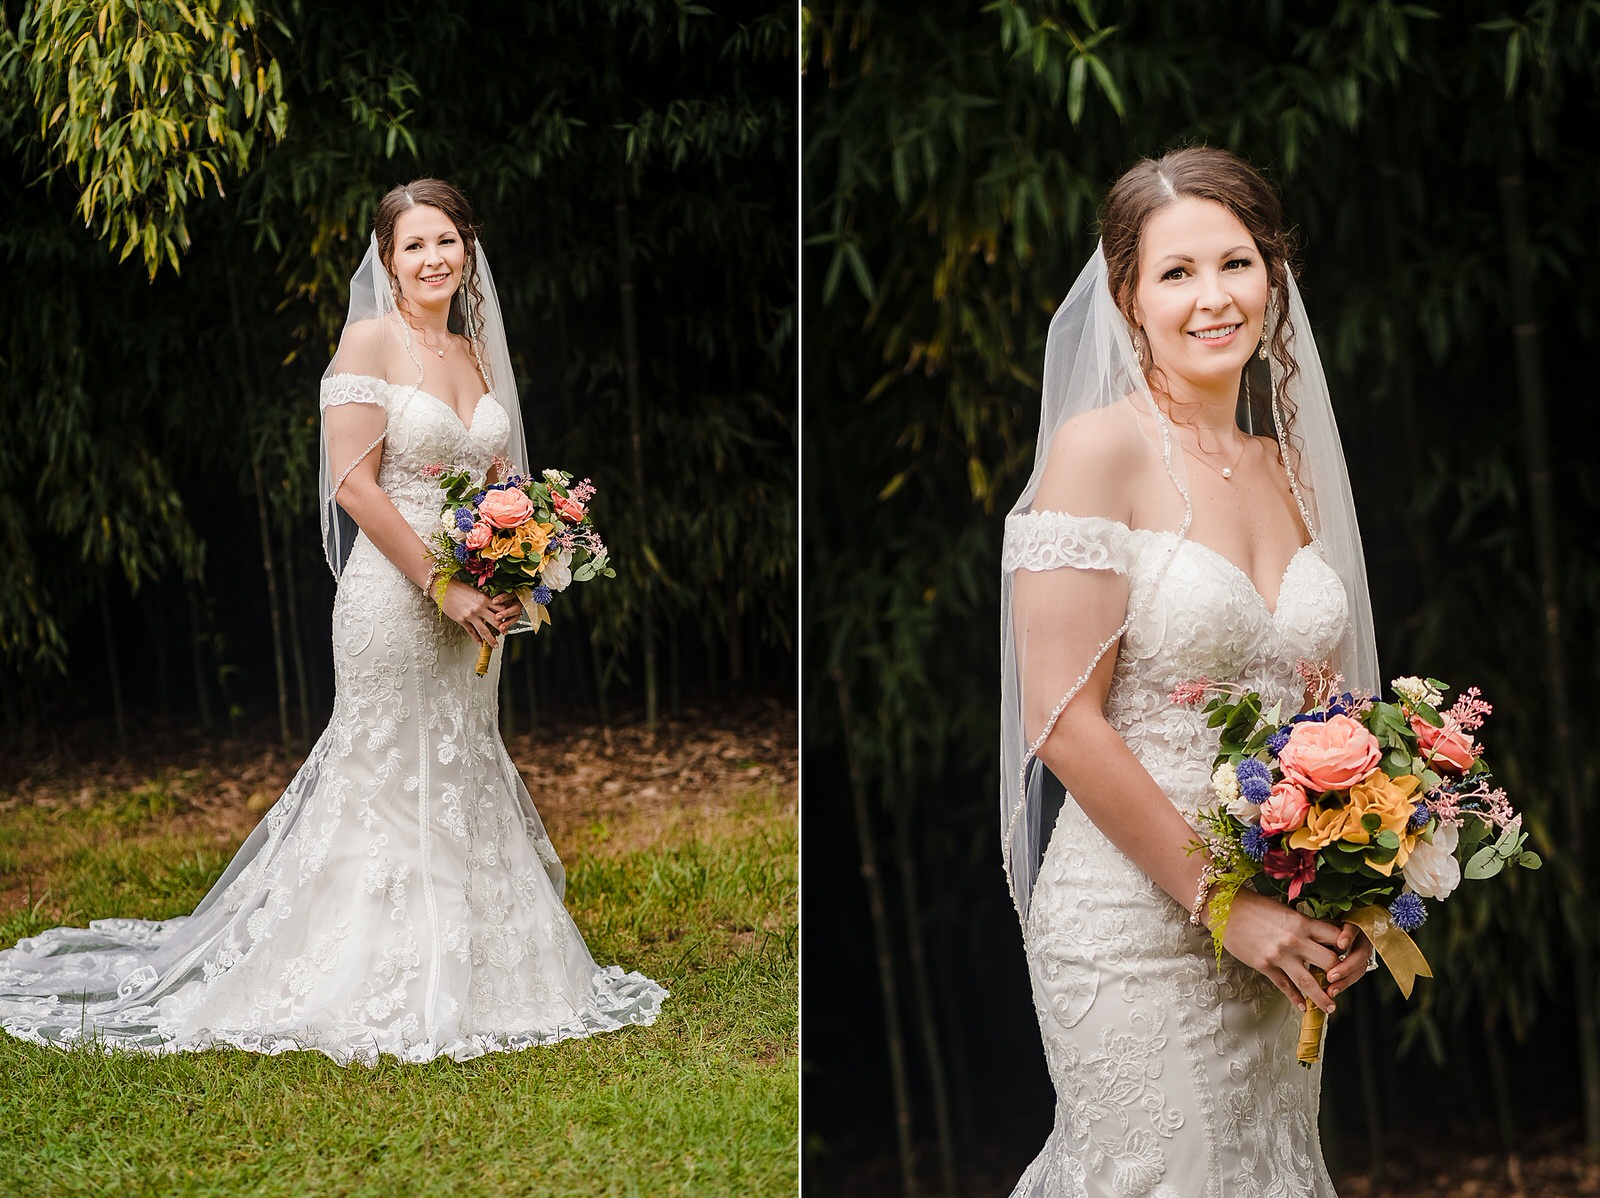 Bridal style - off the shoulder wedding gown, silk bouquet, fingertip veil